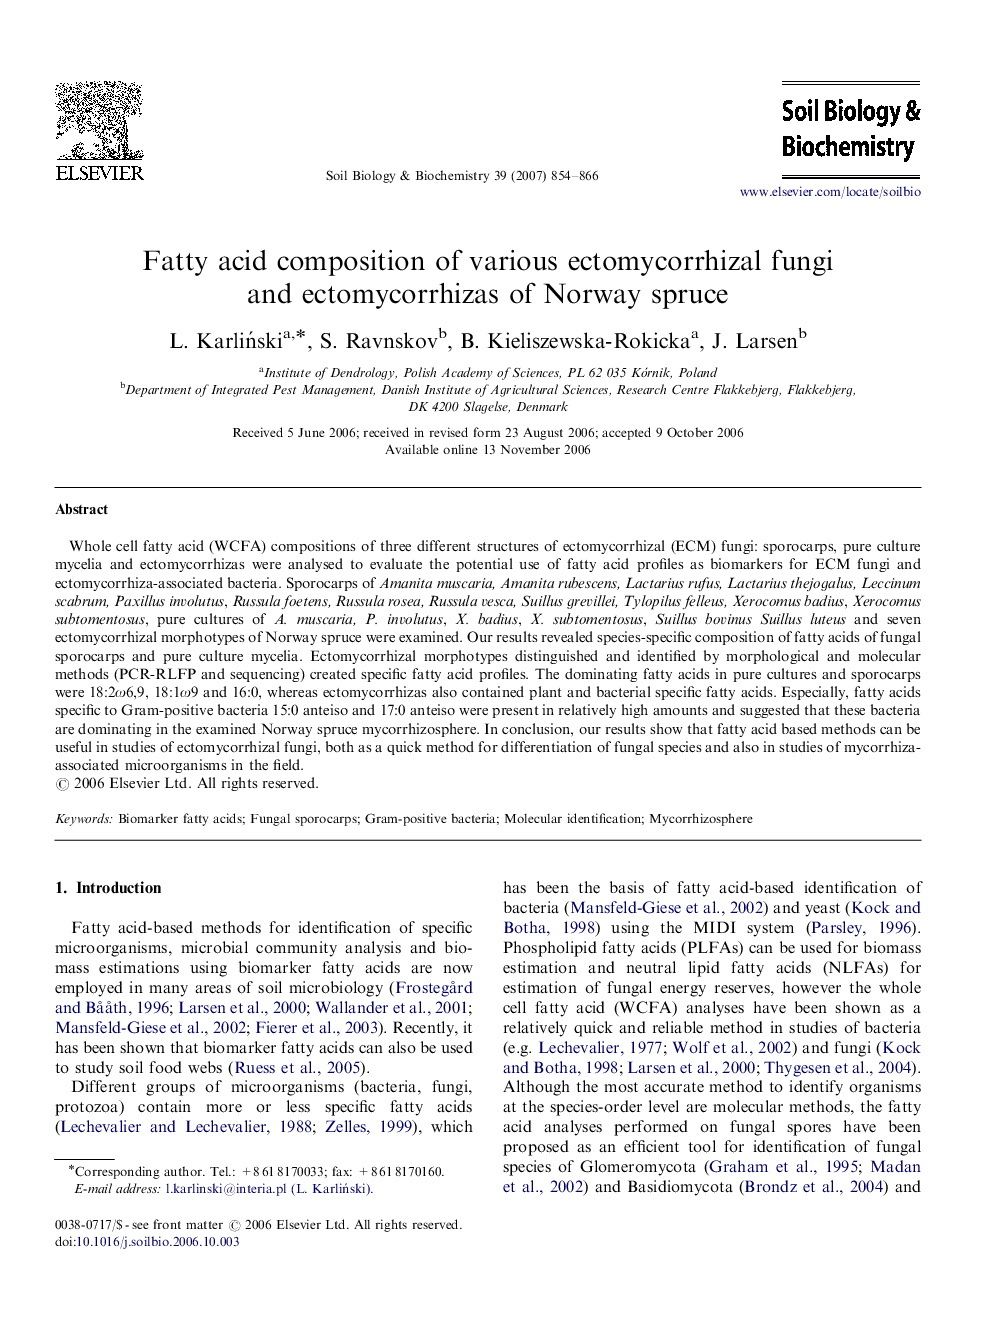 Fatty acid composition of various ectomycorrhizal fungi and ectomycorrhizas of Norway spruce